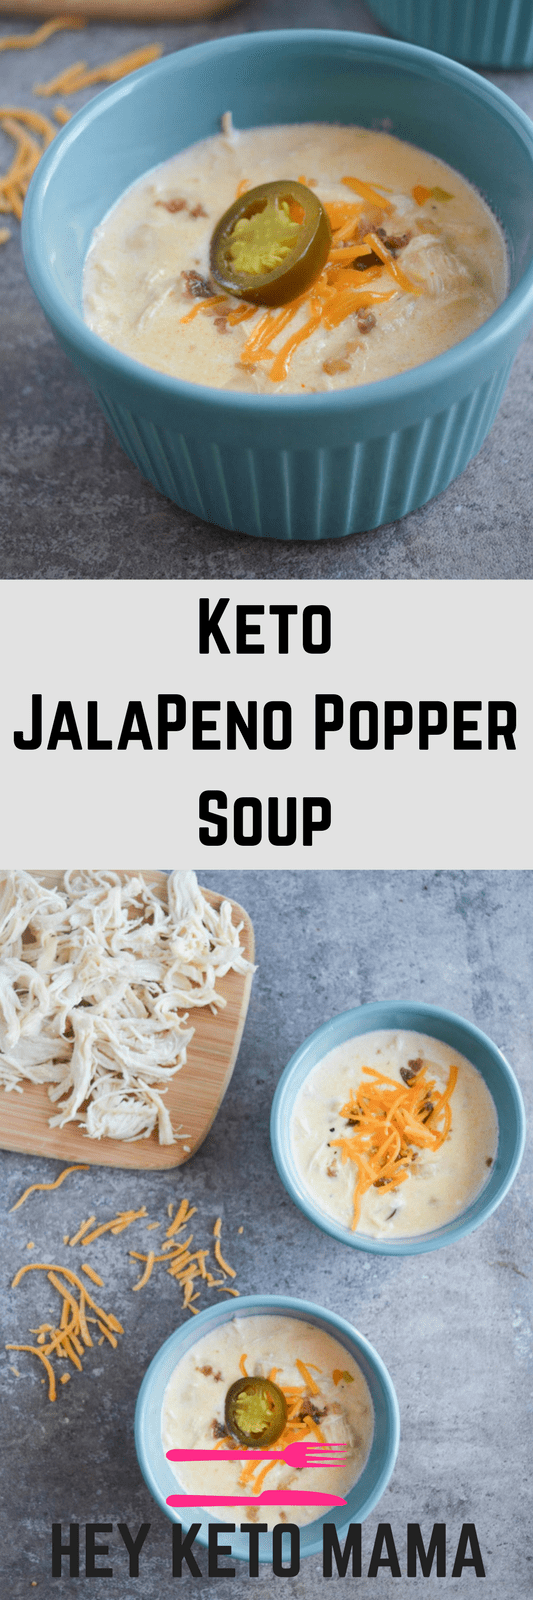 Keto Jalapeno Popper Soup - Hey Keto Mama